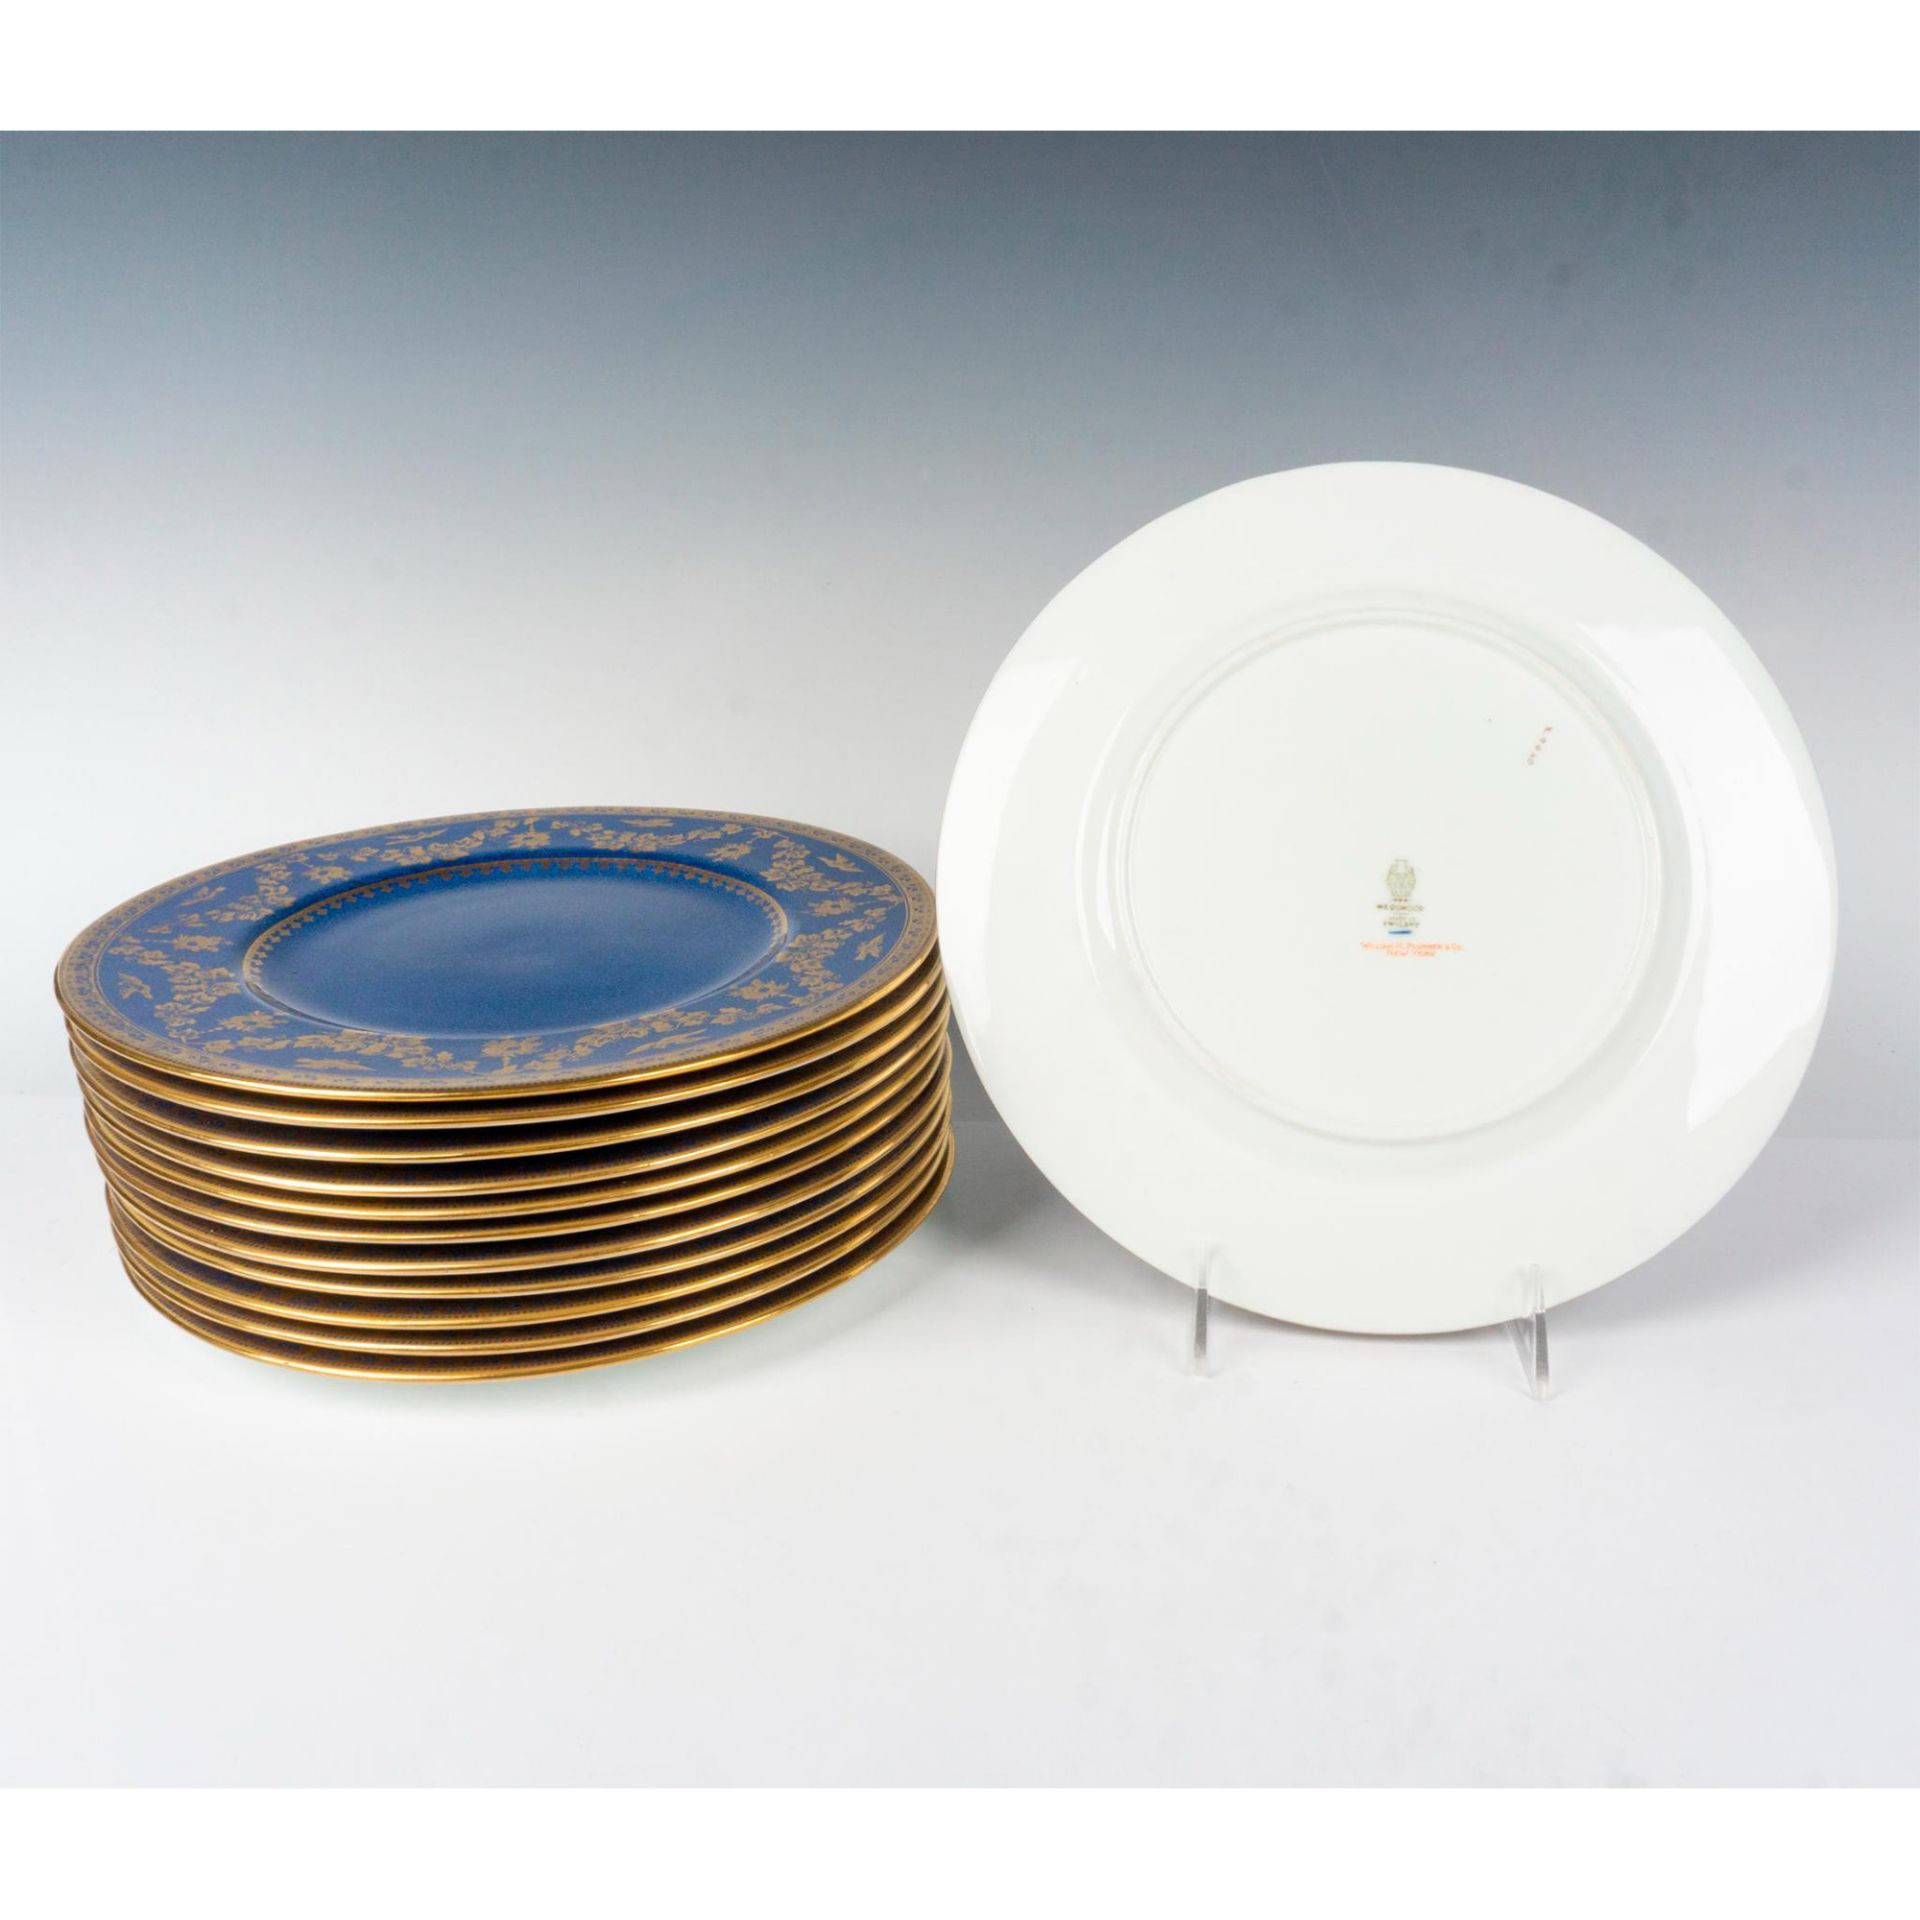 12pc Wedgwood Porcelain Dinner Plates - Image 2 of 3